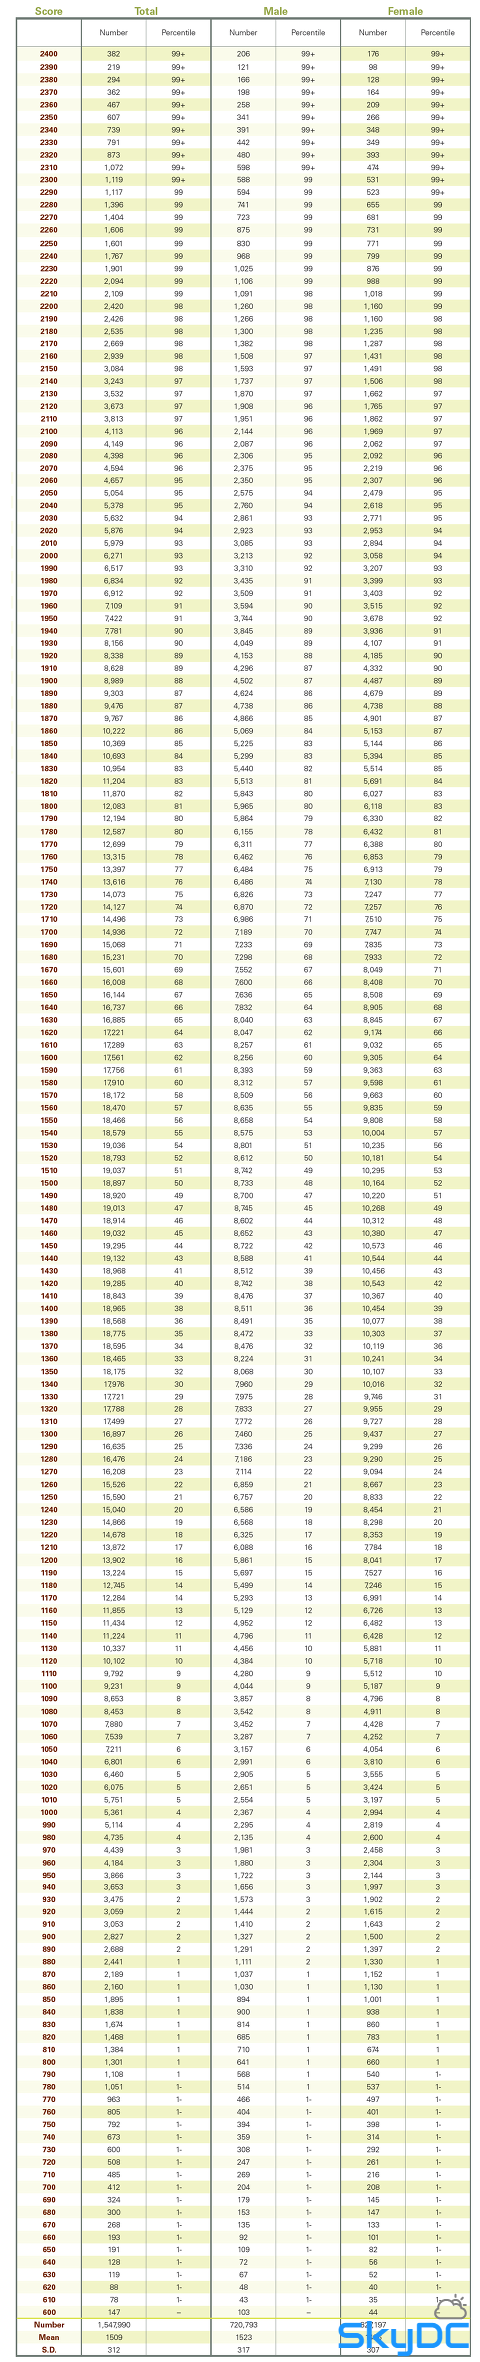 2010 SAT® Percentile Ranks (composite) / 2010 SAT 전체 성적 분포